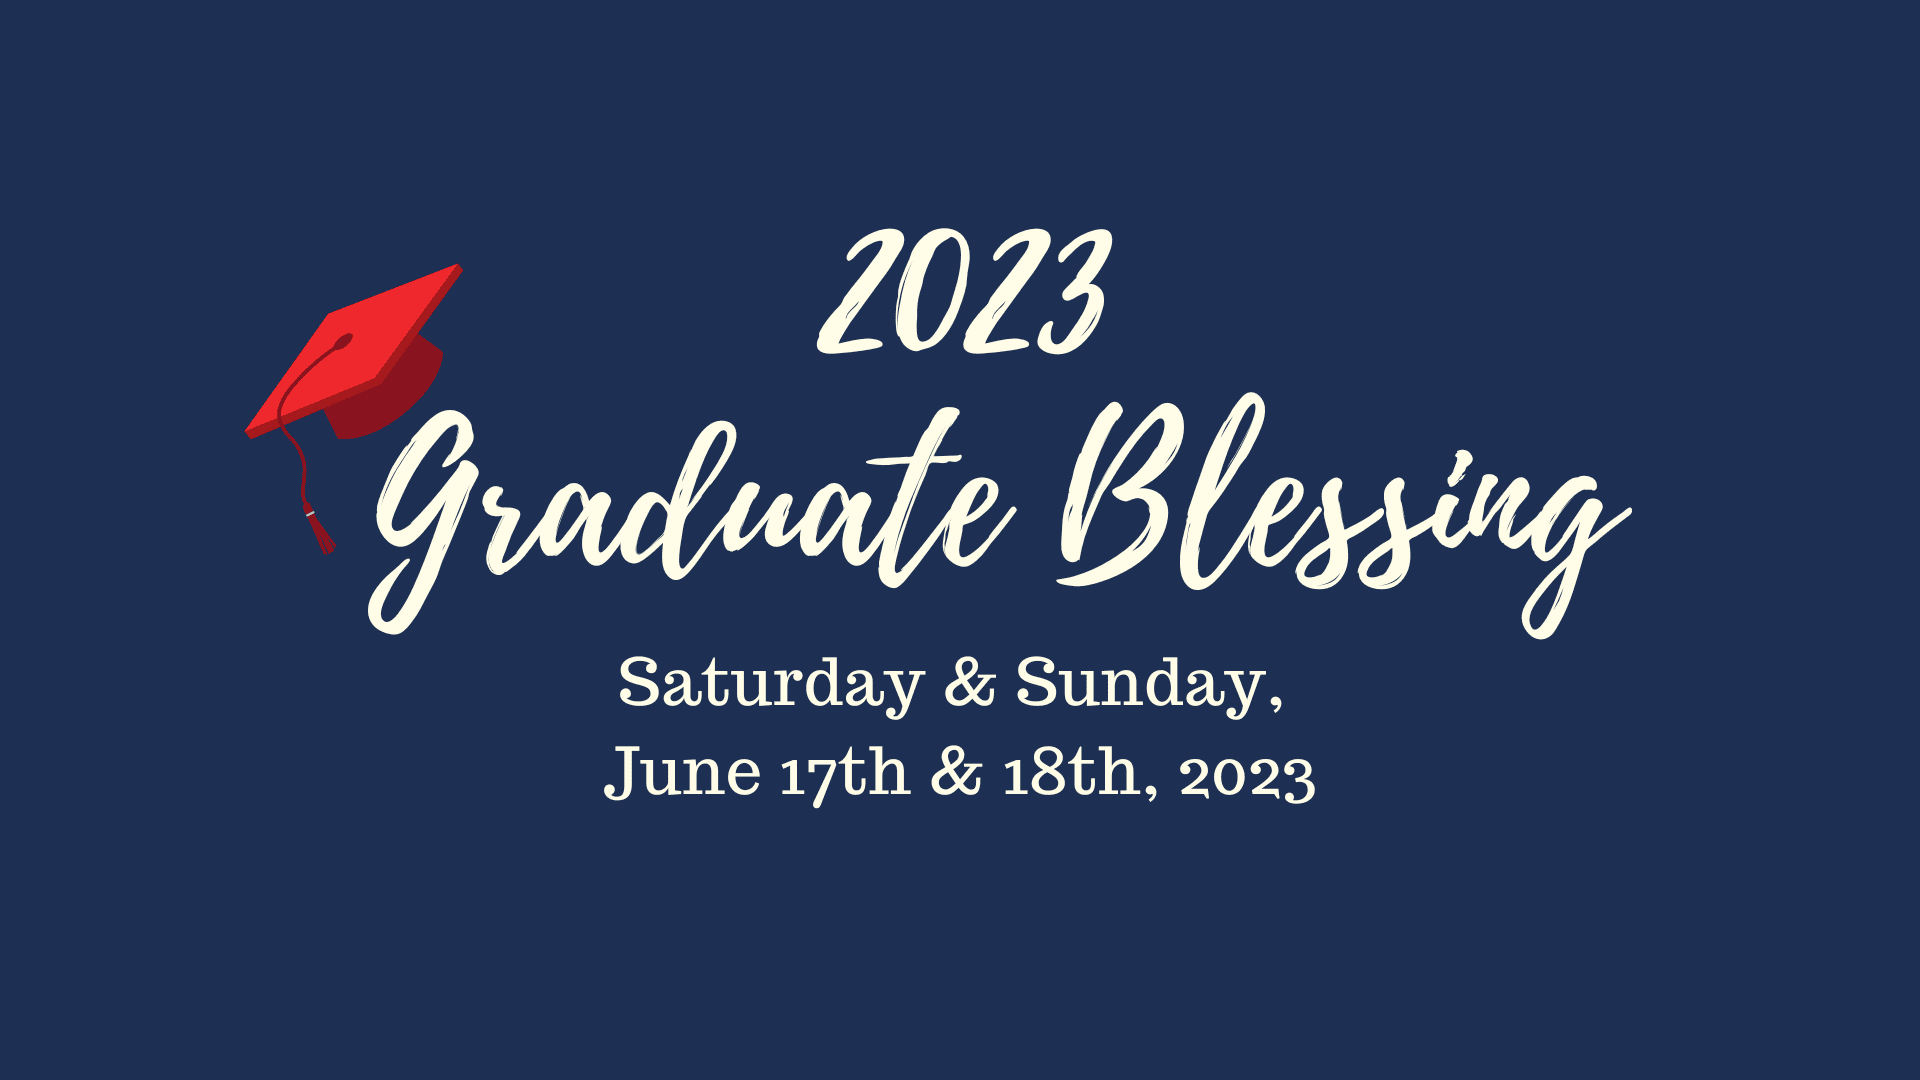 Graduation Blessing June 17 & 18, 2023